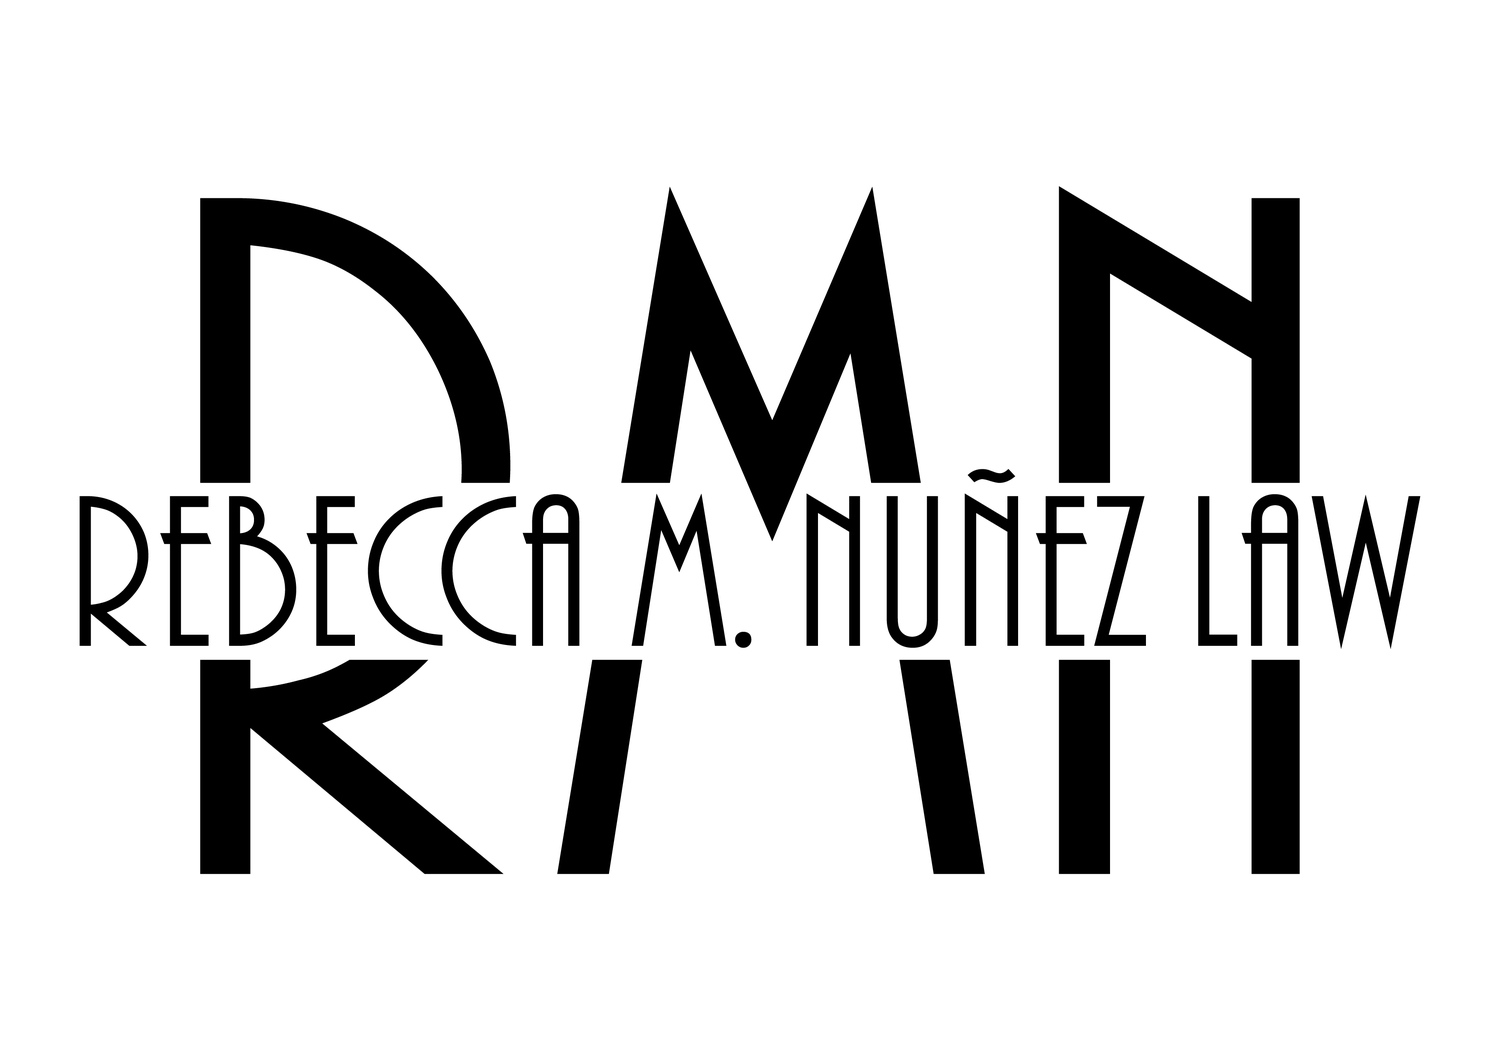 Rebecca M. Nuñez Law